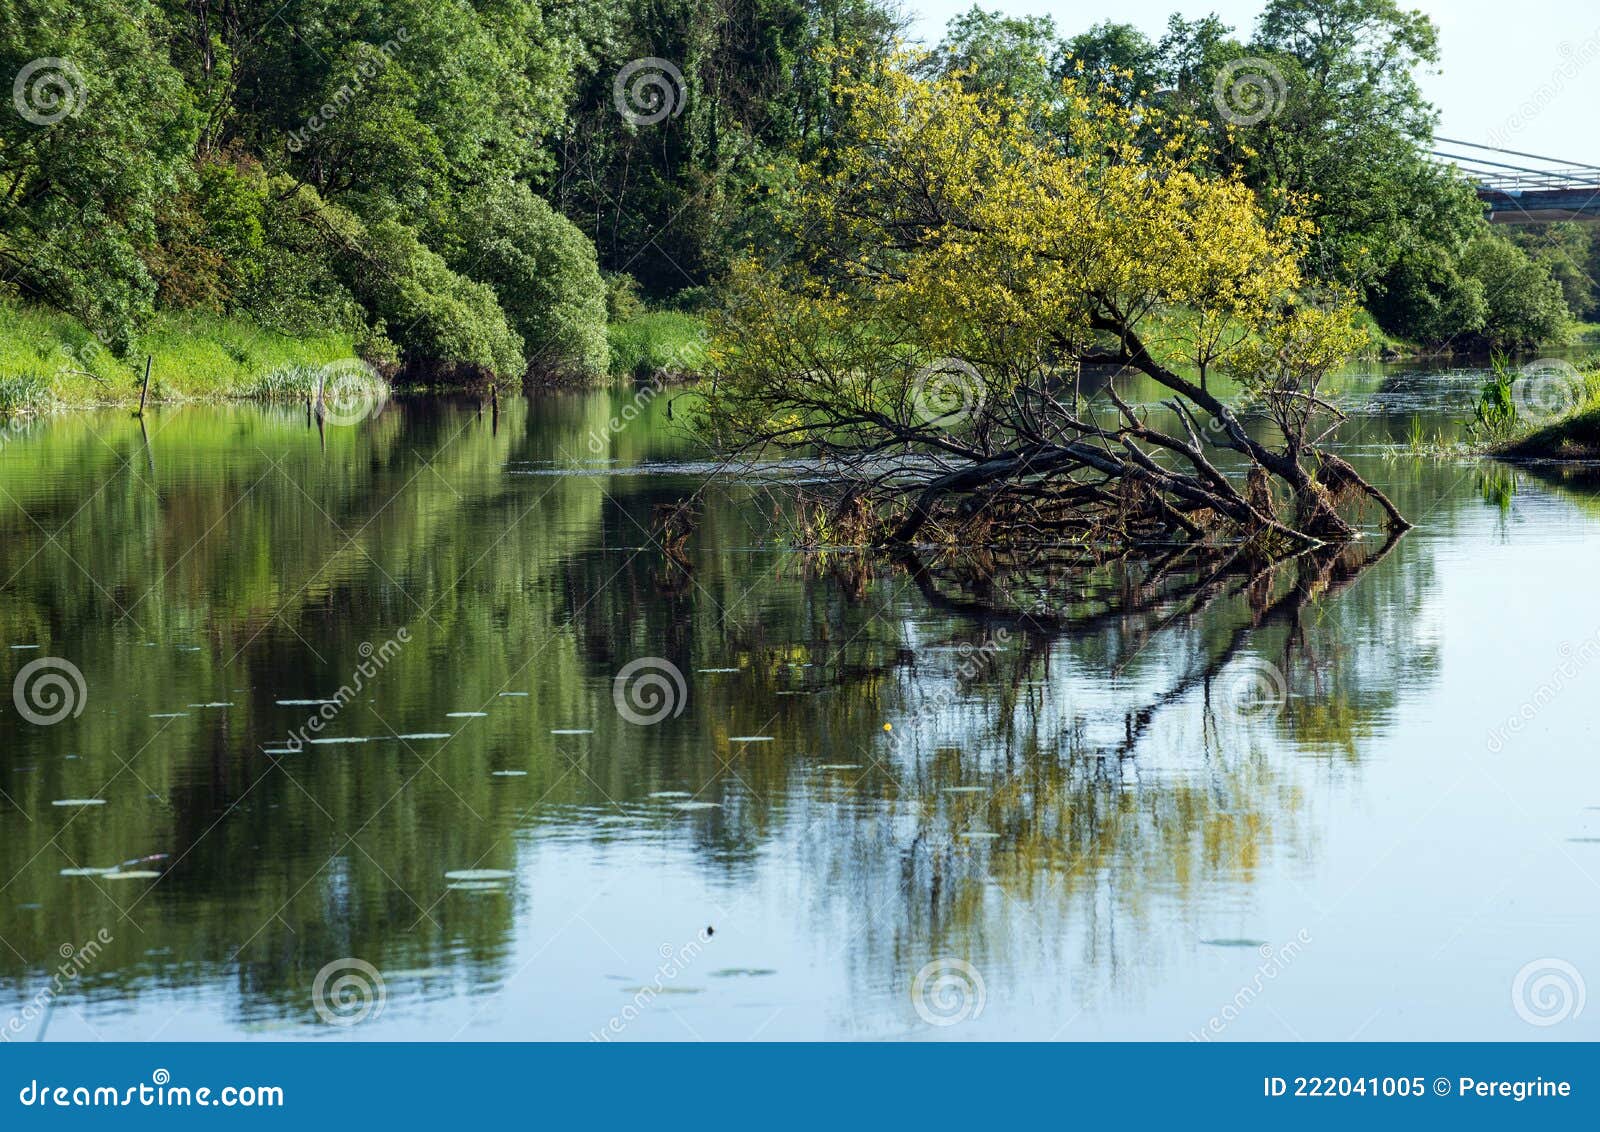 River Erne in Co. Cavan, Ireland Stock Image - Image of landscape ...